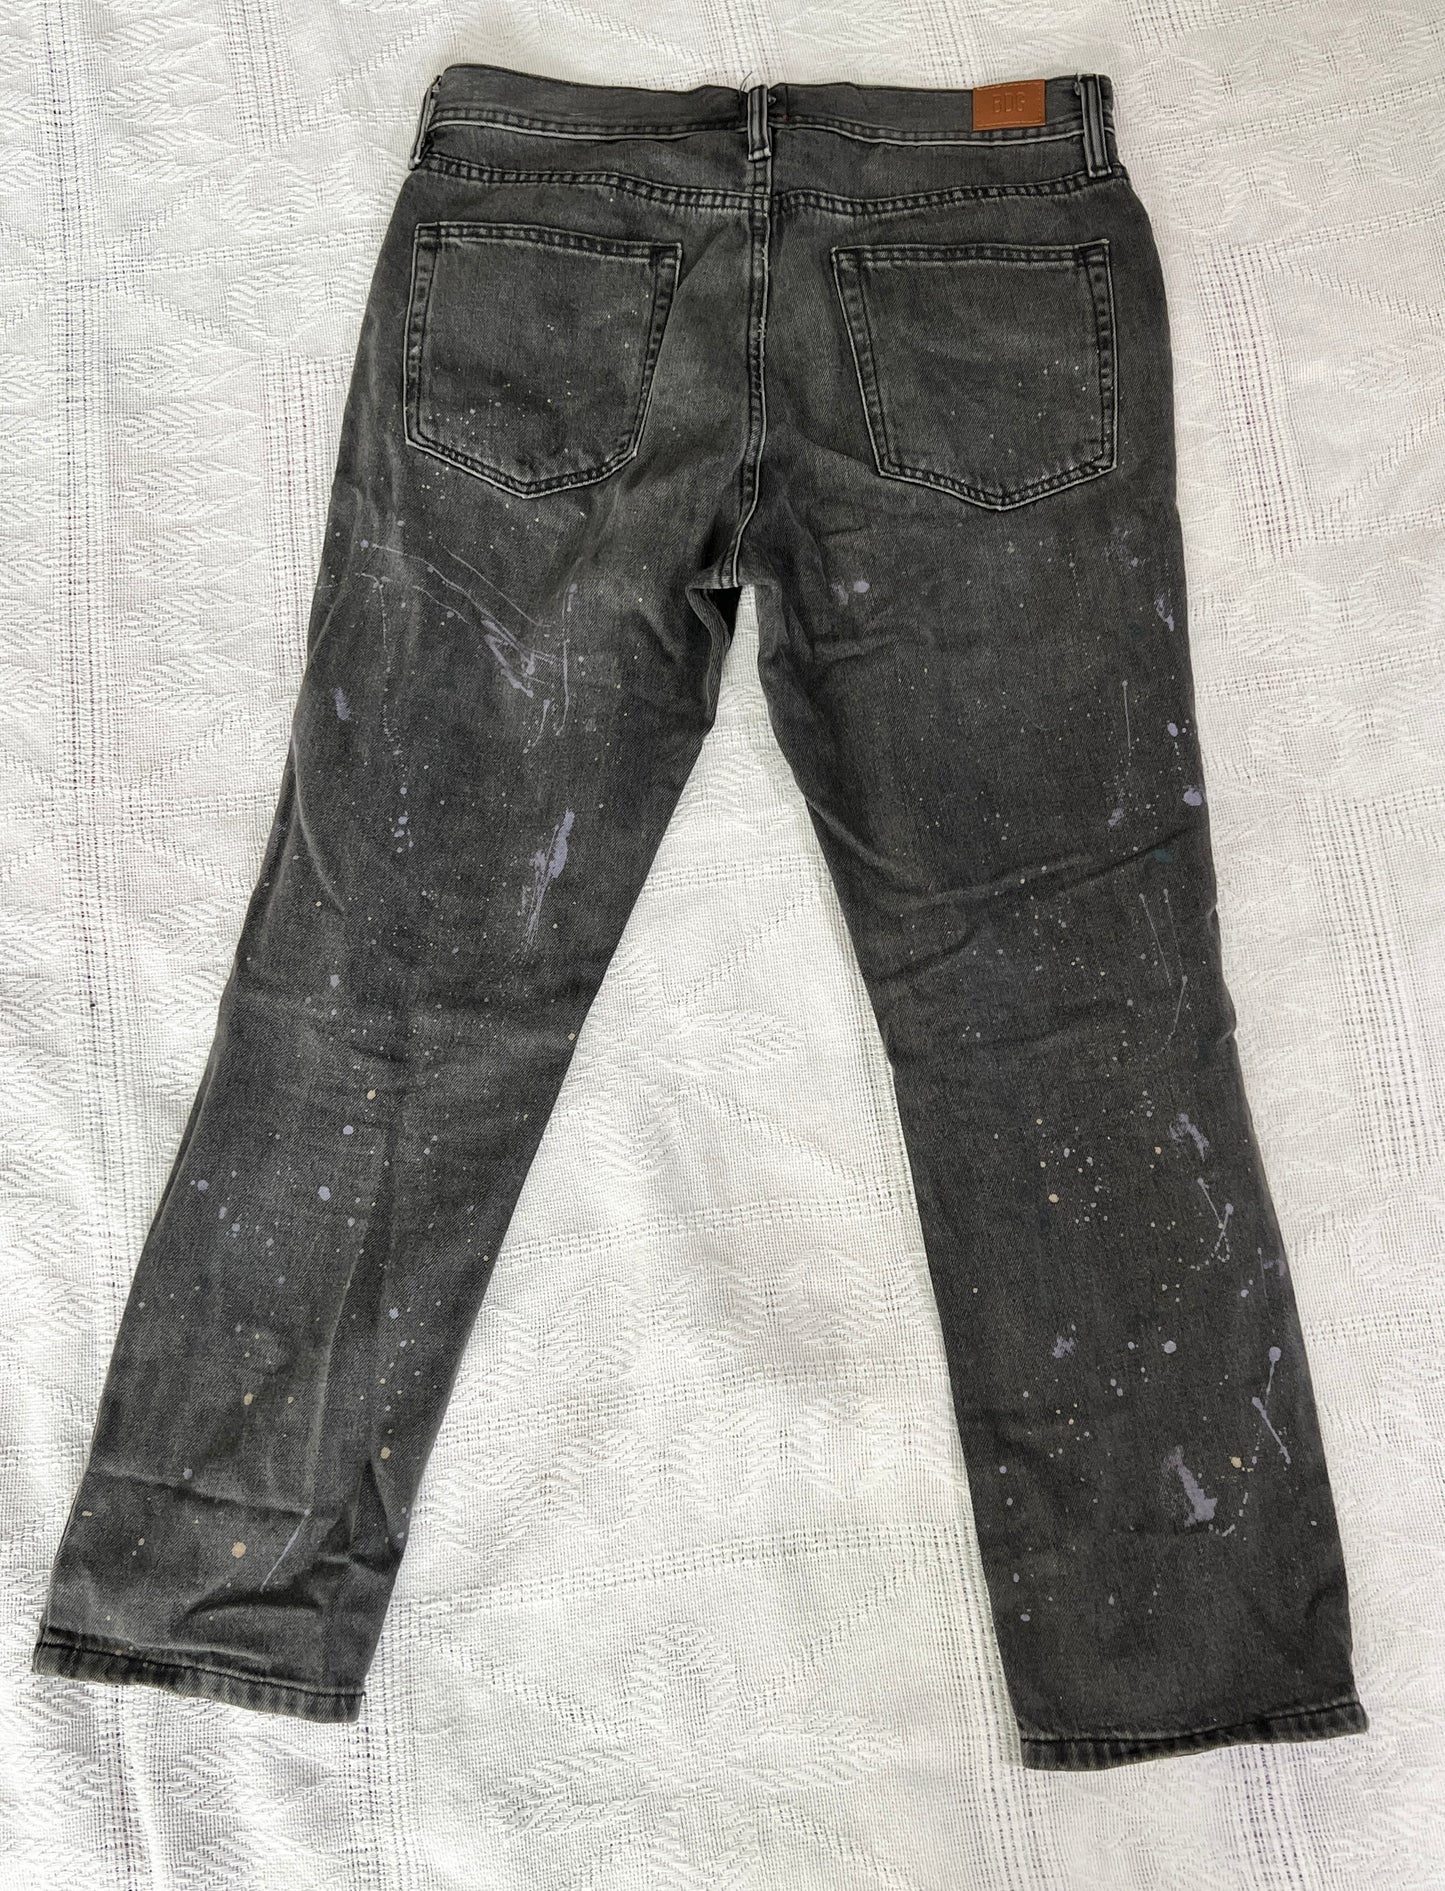 Distressed Black Jeans